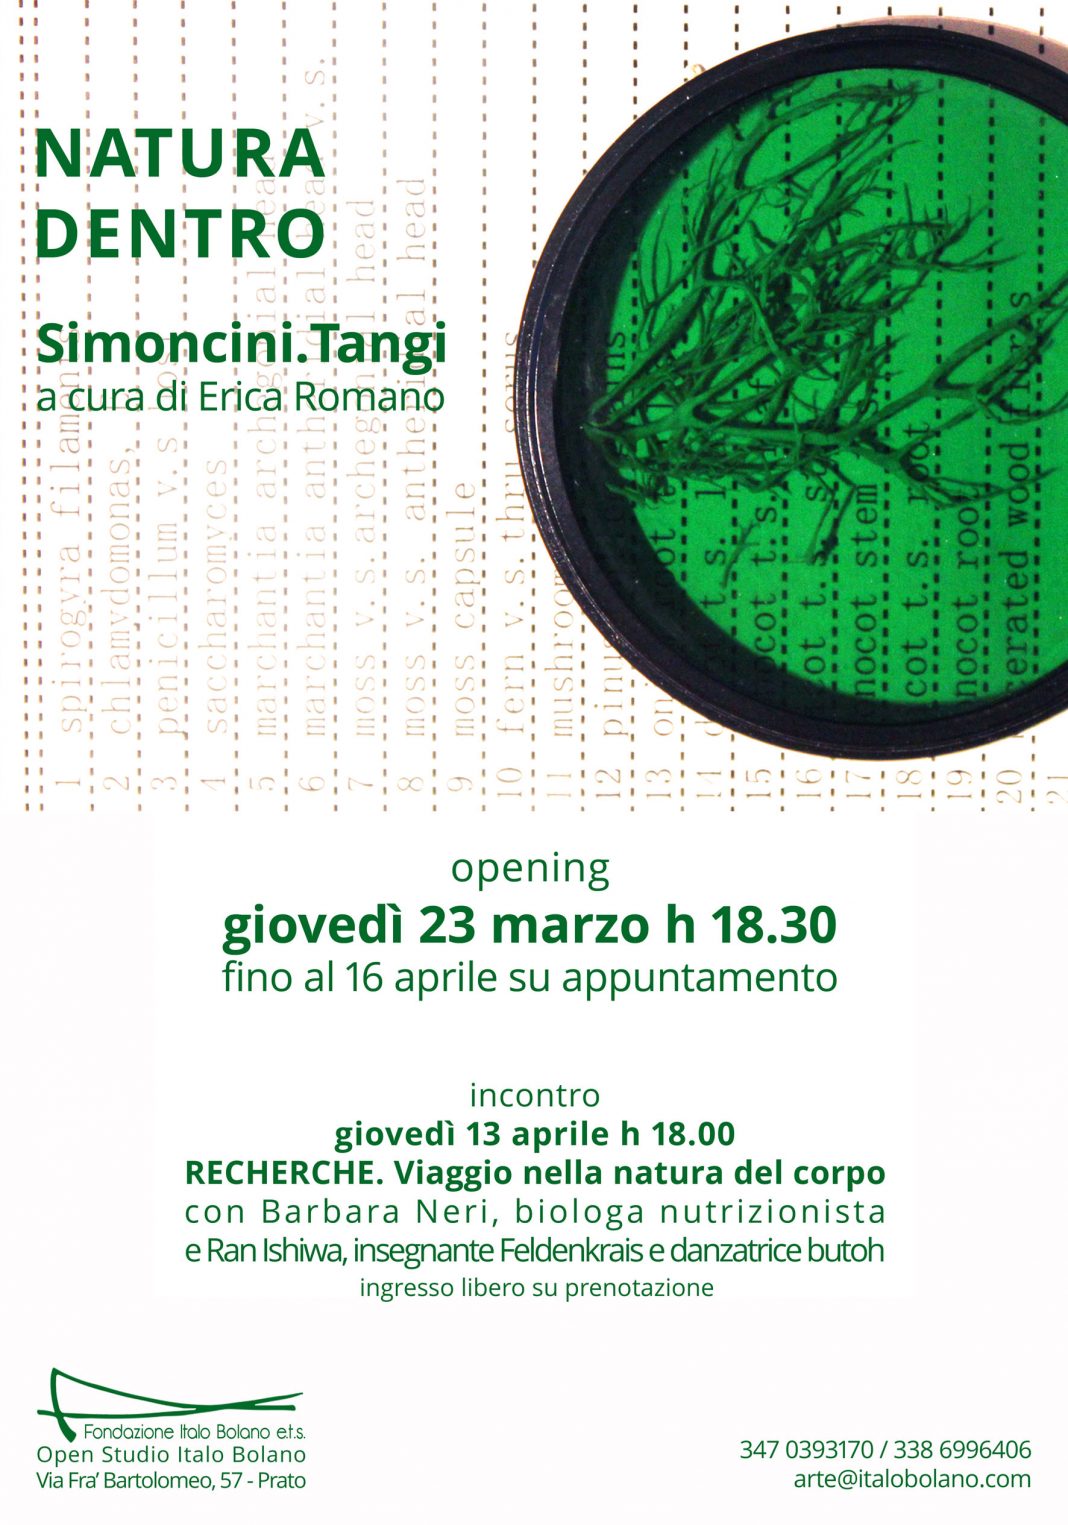 Simoncini.Tangi – Natura Dentrohttps://www.exibart.com/repository/media/formidable/11/img/c49/locandina-Simoncini-Tangi-r-1068x1525.jpg